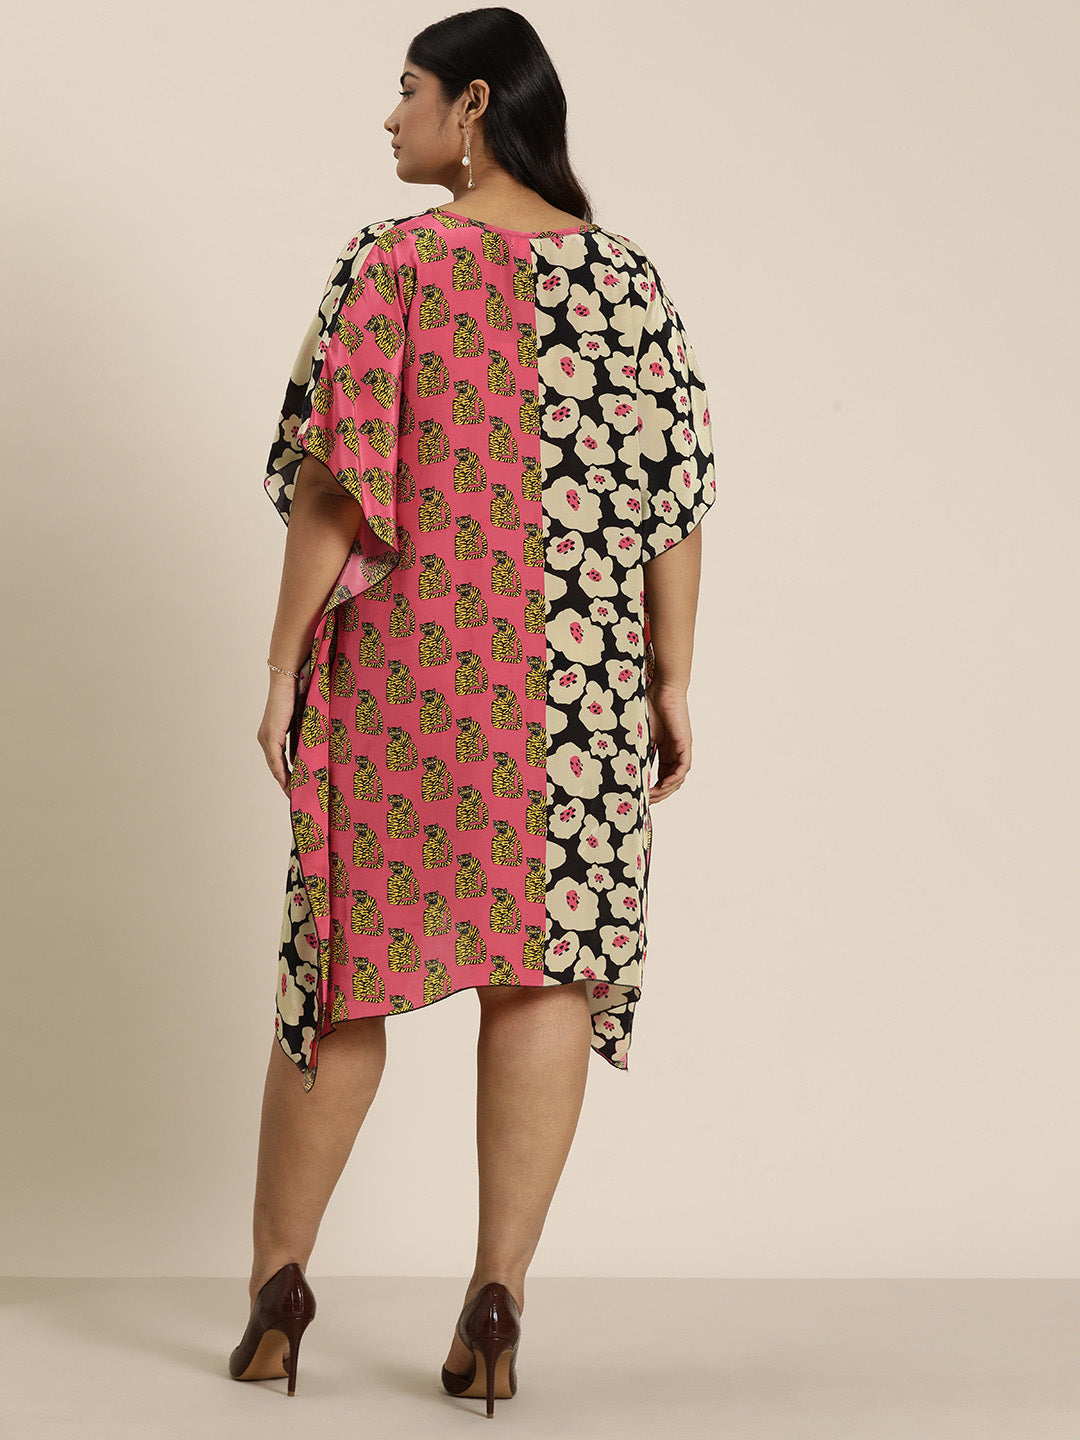 Satin Eclectic print V-Neck stylish kaftan dress